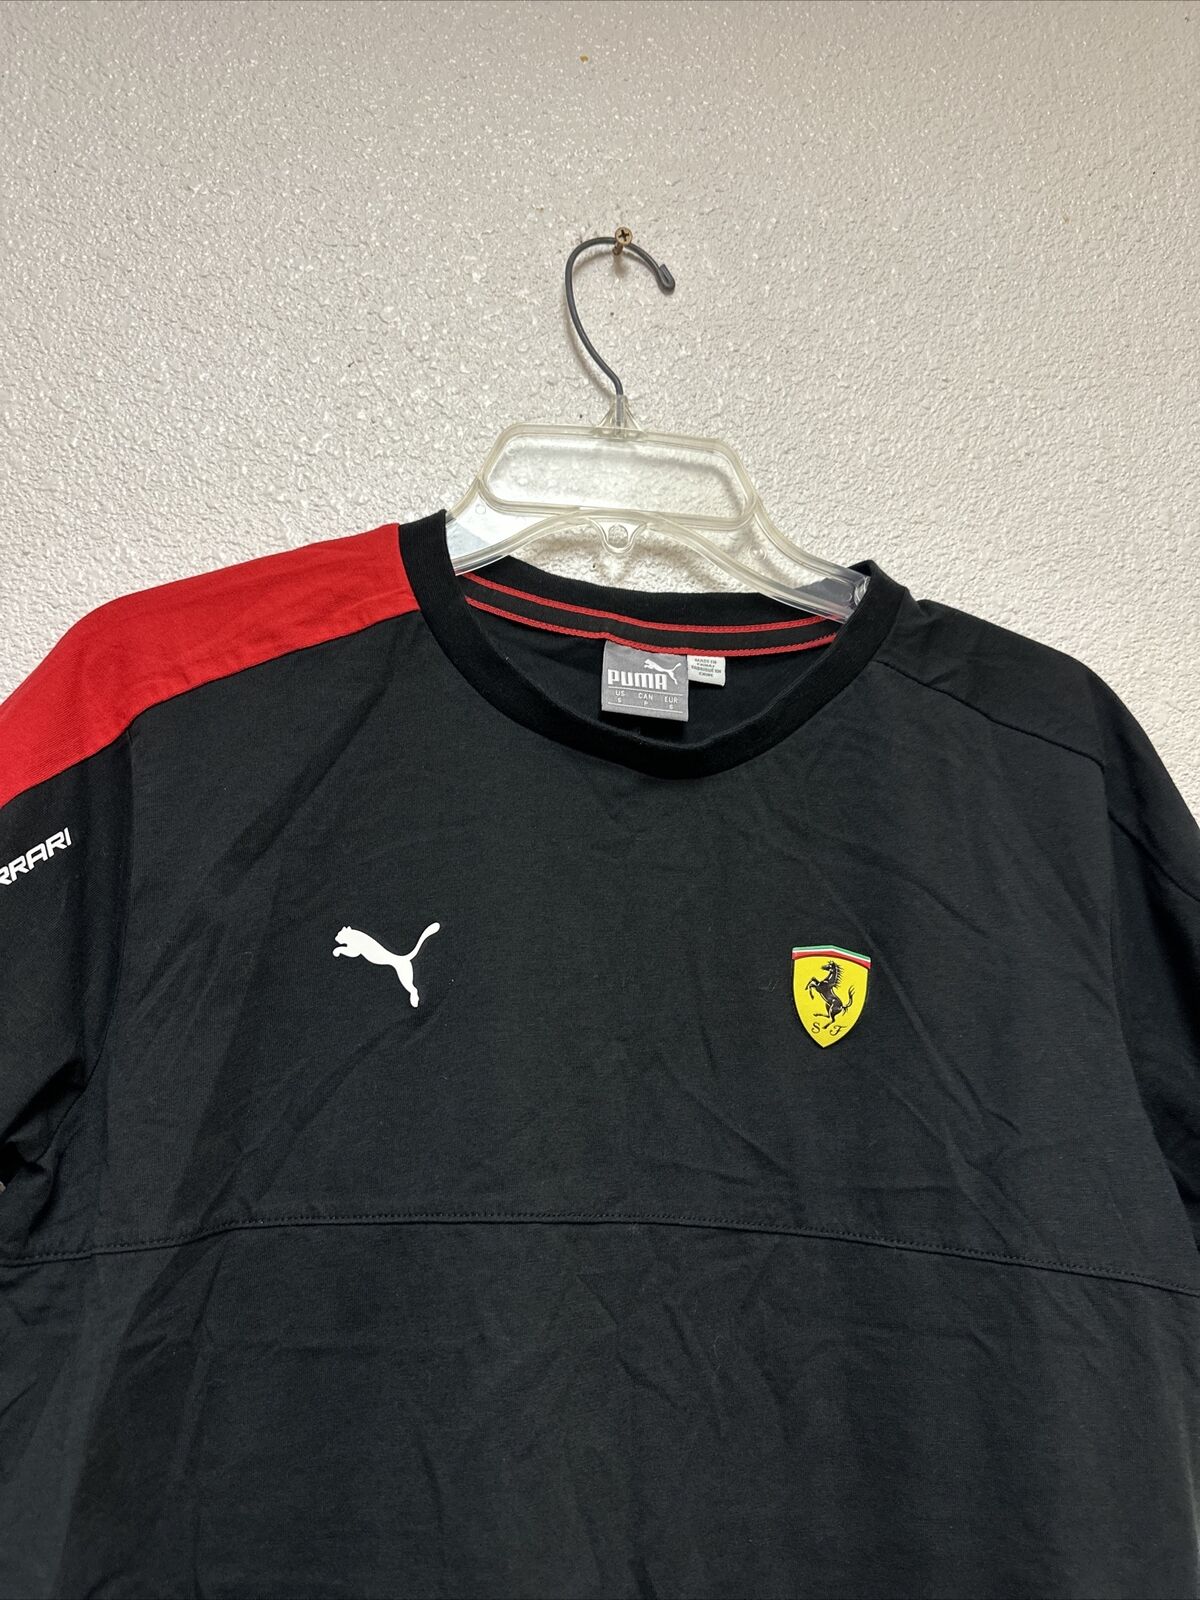 Puma Ferrari black shirt scuderia t shirt Sz S - image 3